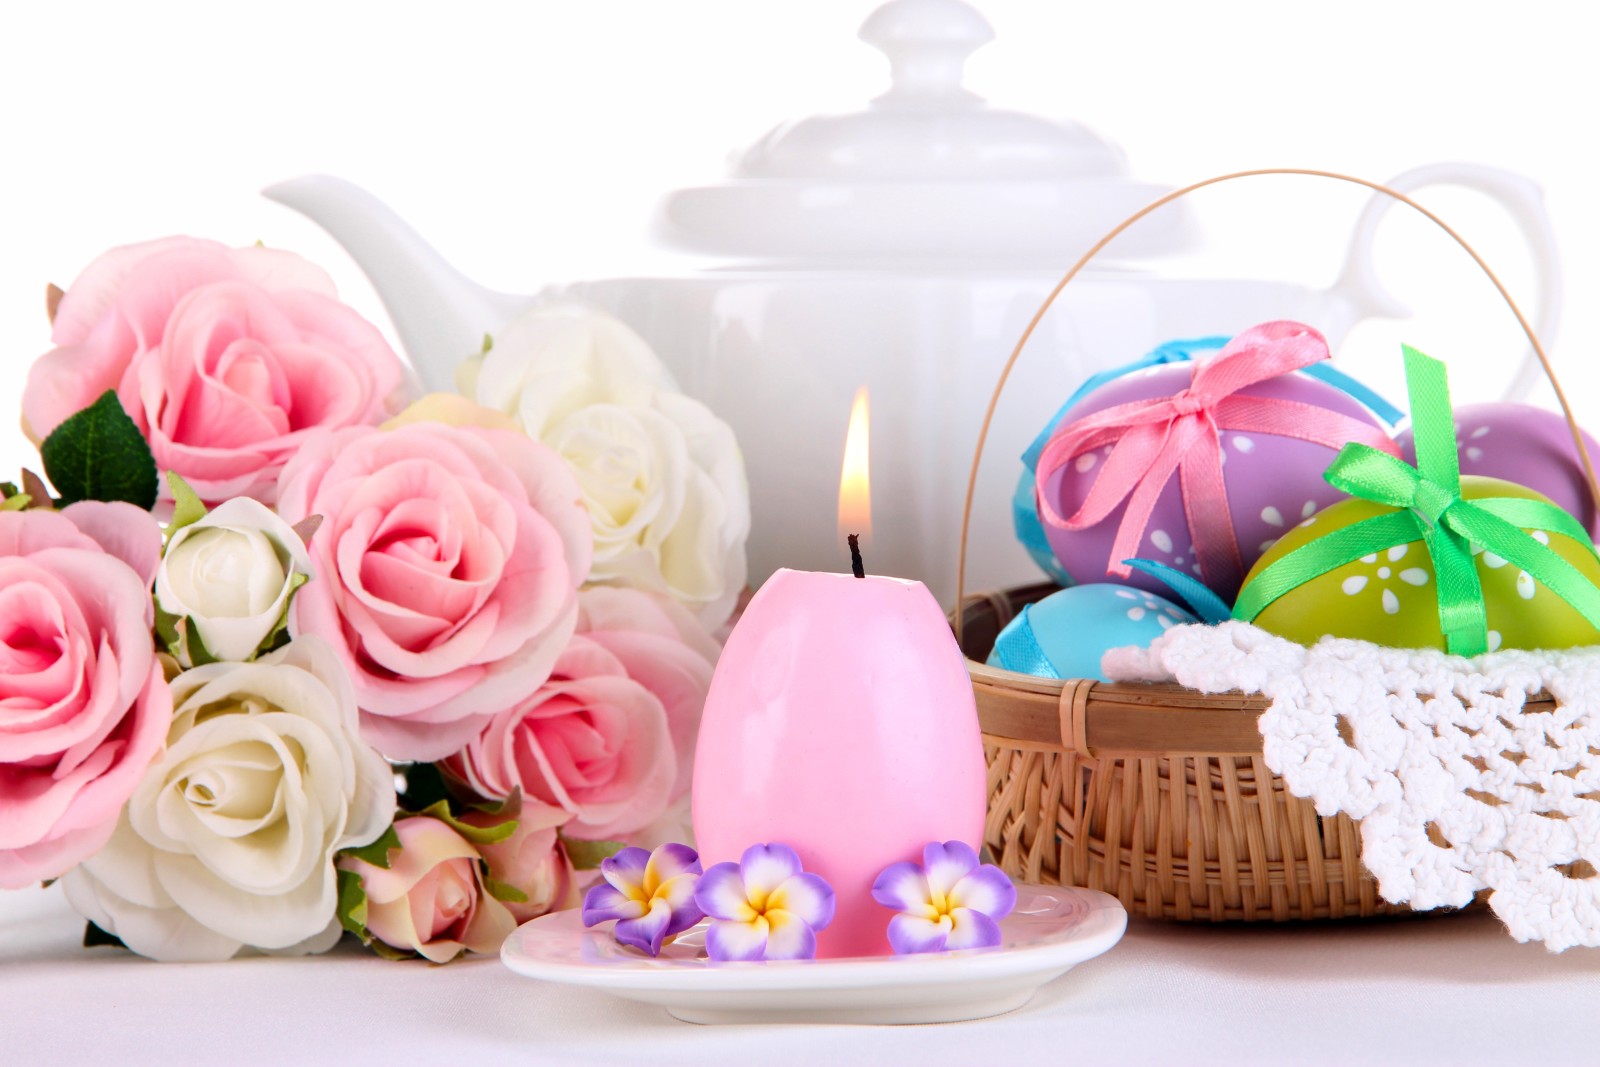 mawar, telur, bunga-bunga, buket, lilin, keranjang, Paskah